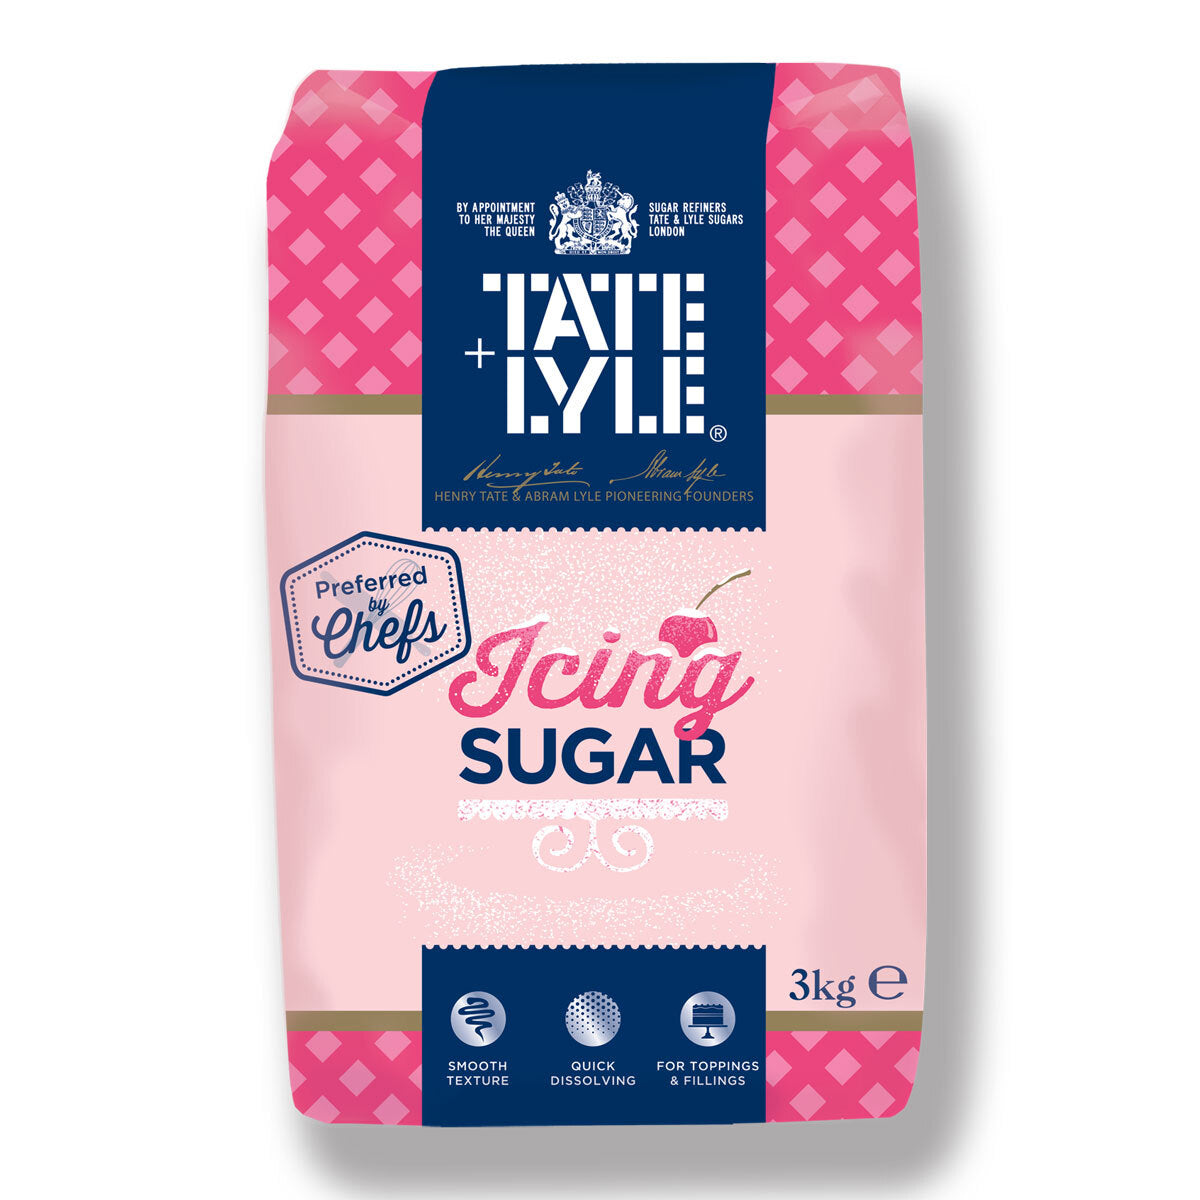 Tate & Lyle Fairtrade Icing Sugar, 3kg Sugar Costco UK   